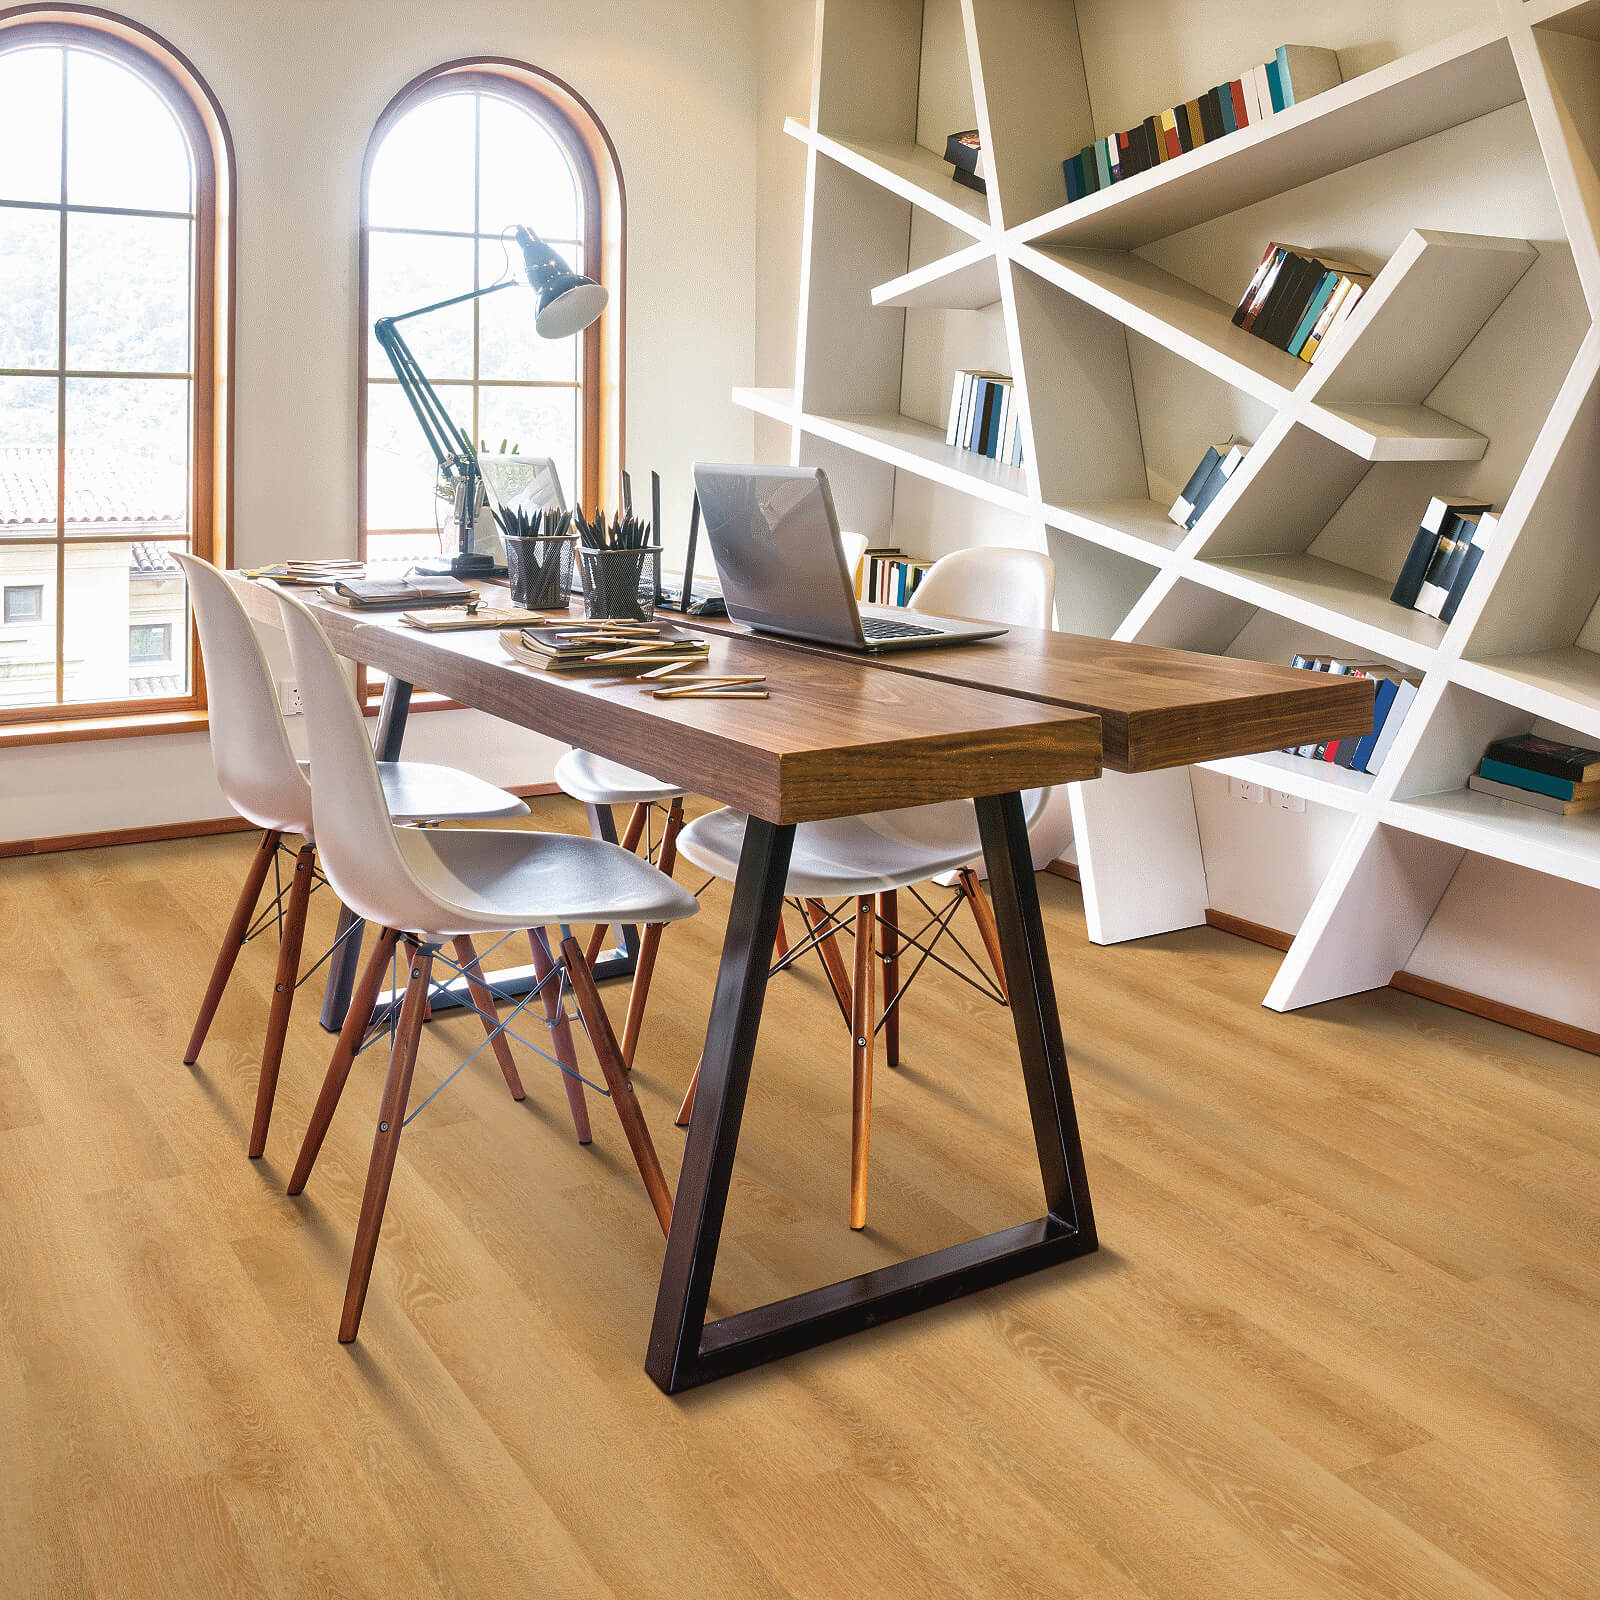 Vinyl flooring for study room | York Carpetland USA 